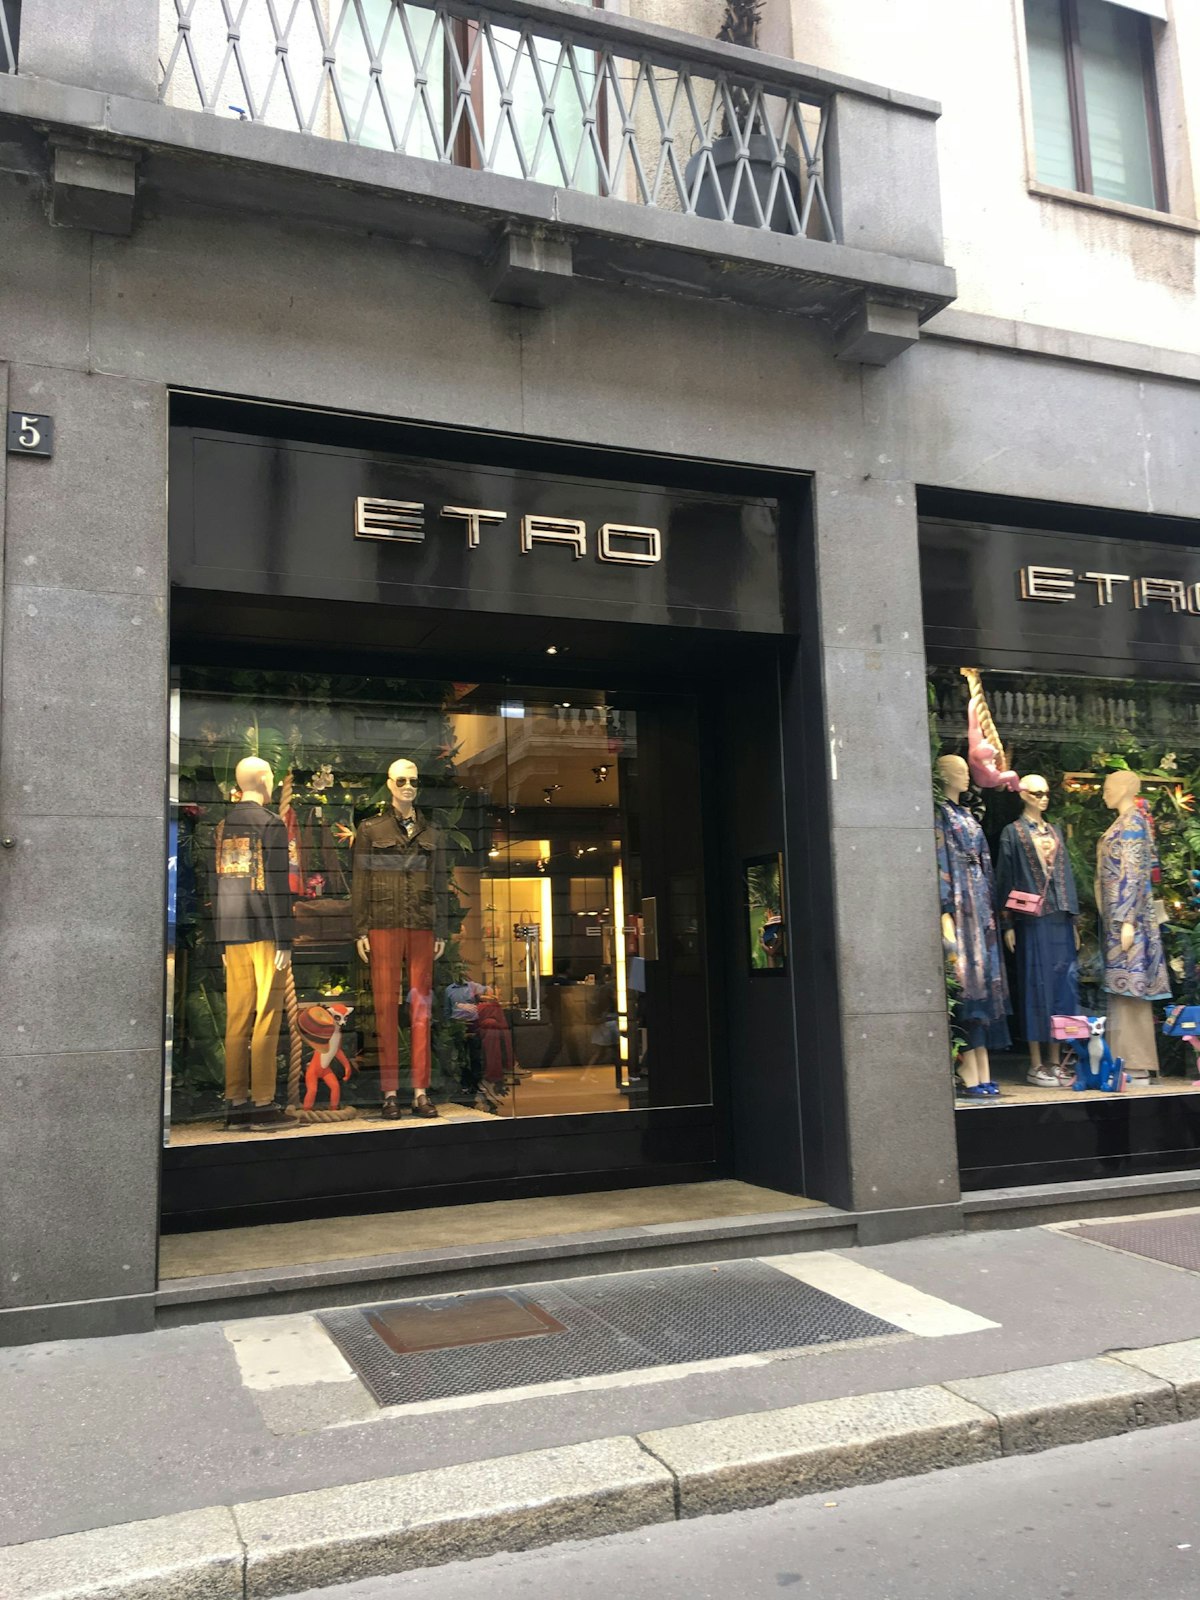 Etro shop entrance